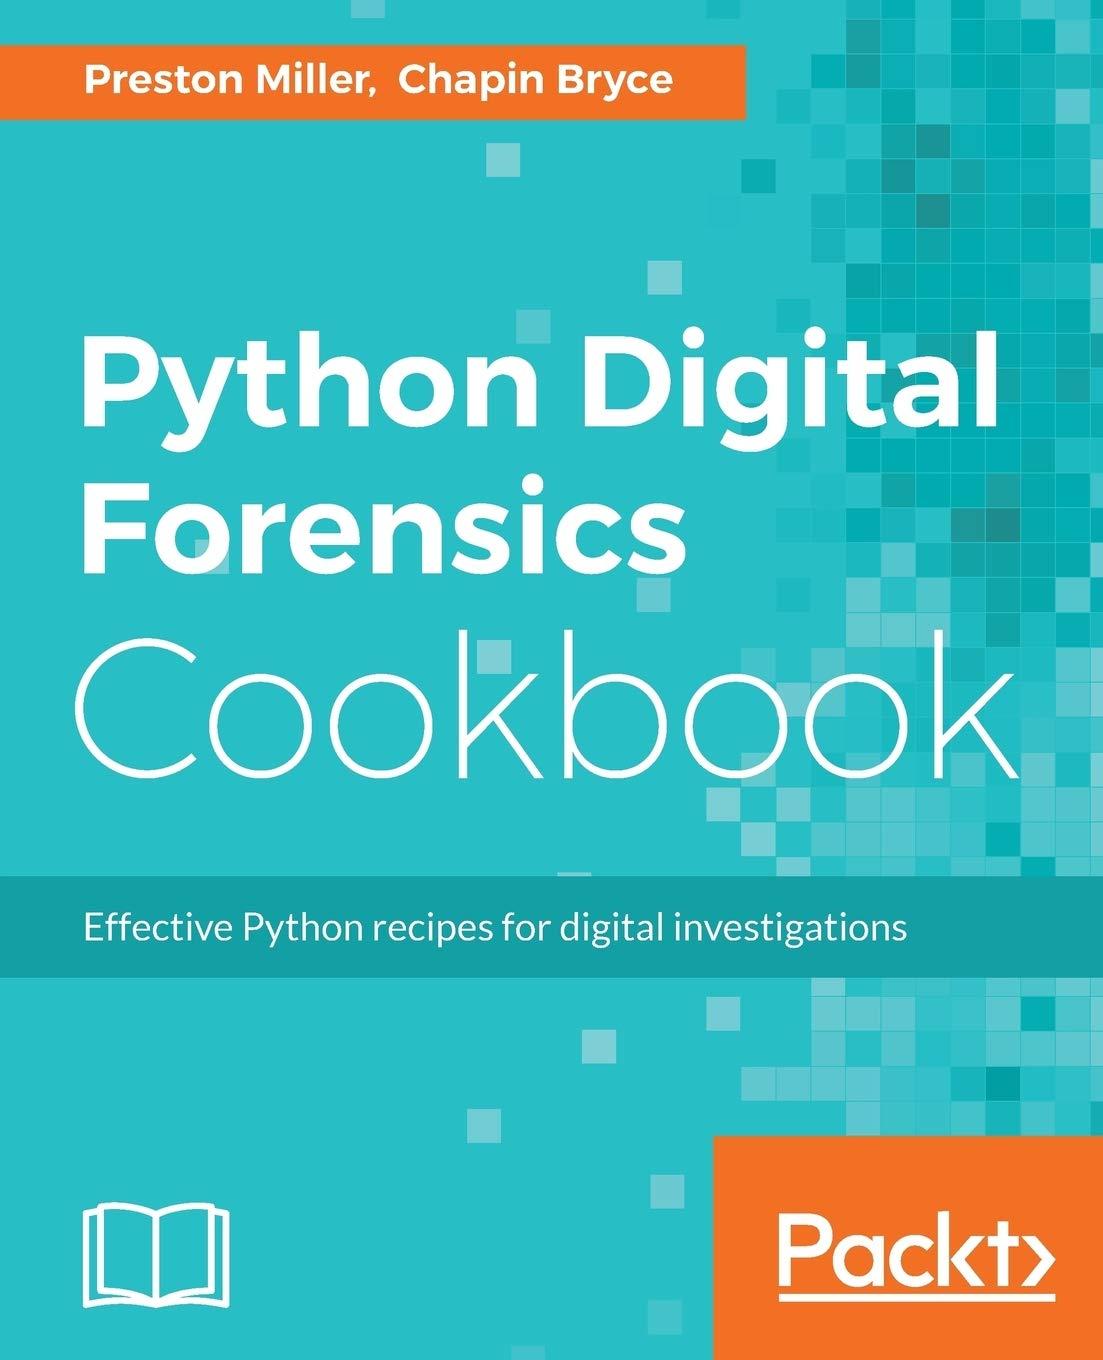 python digital forensics cookbook effective python recipes for digital investigations 1st edition preston